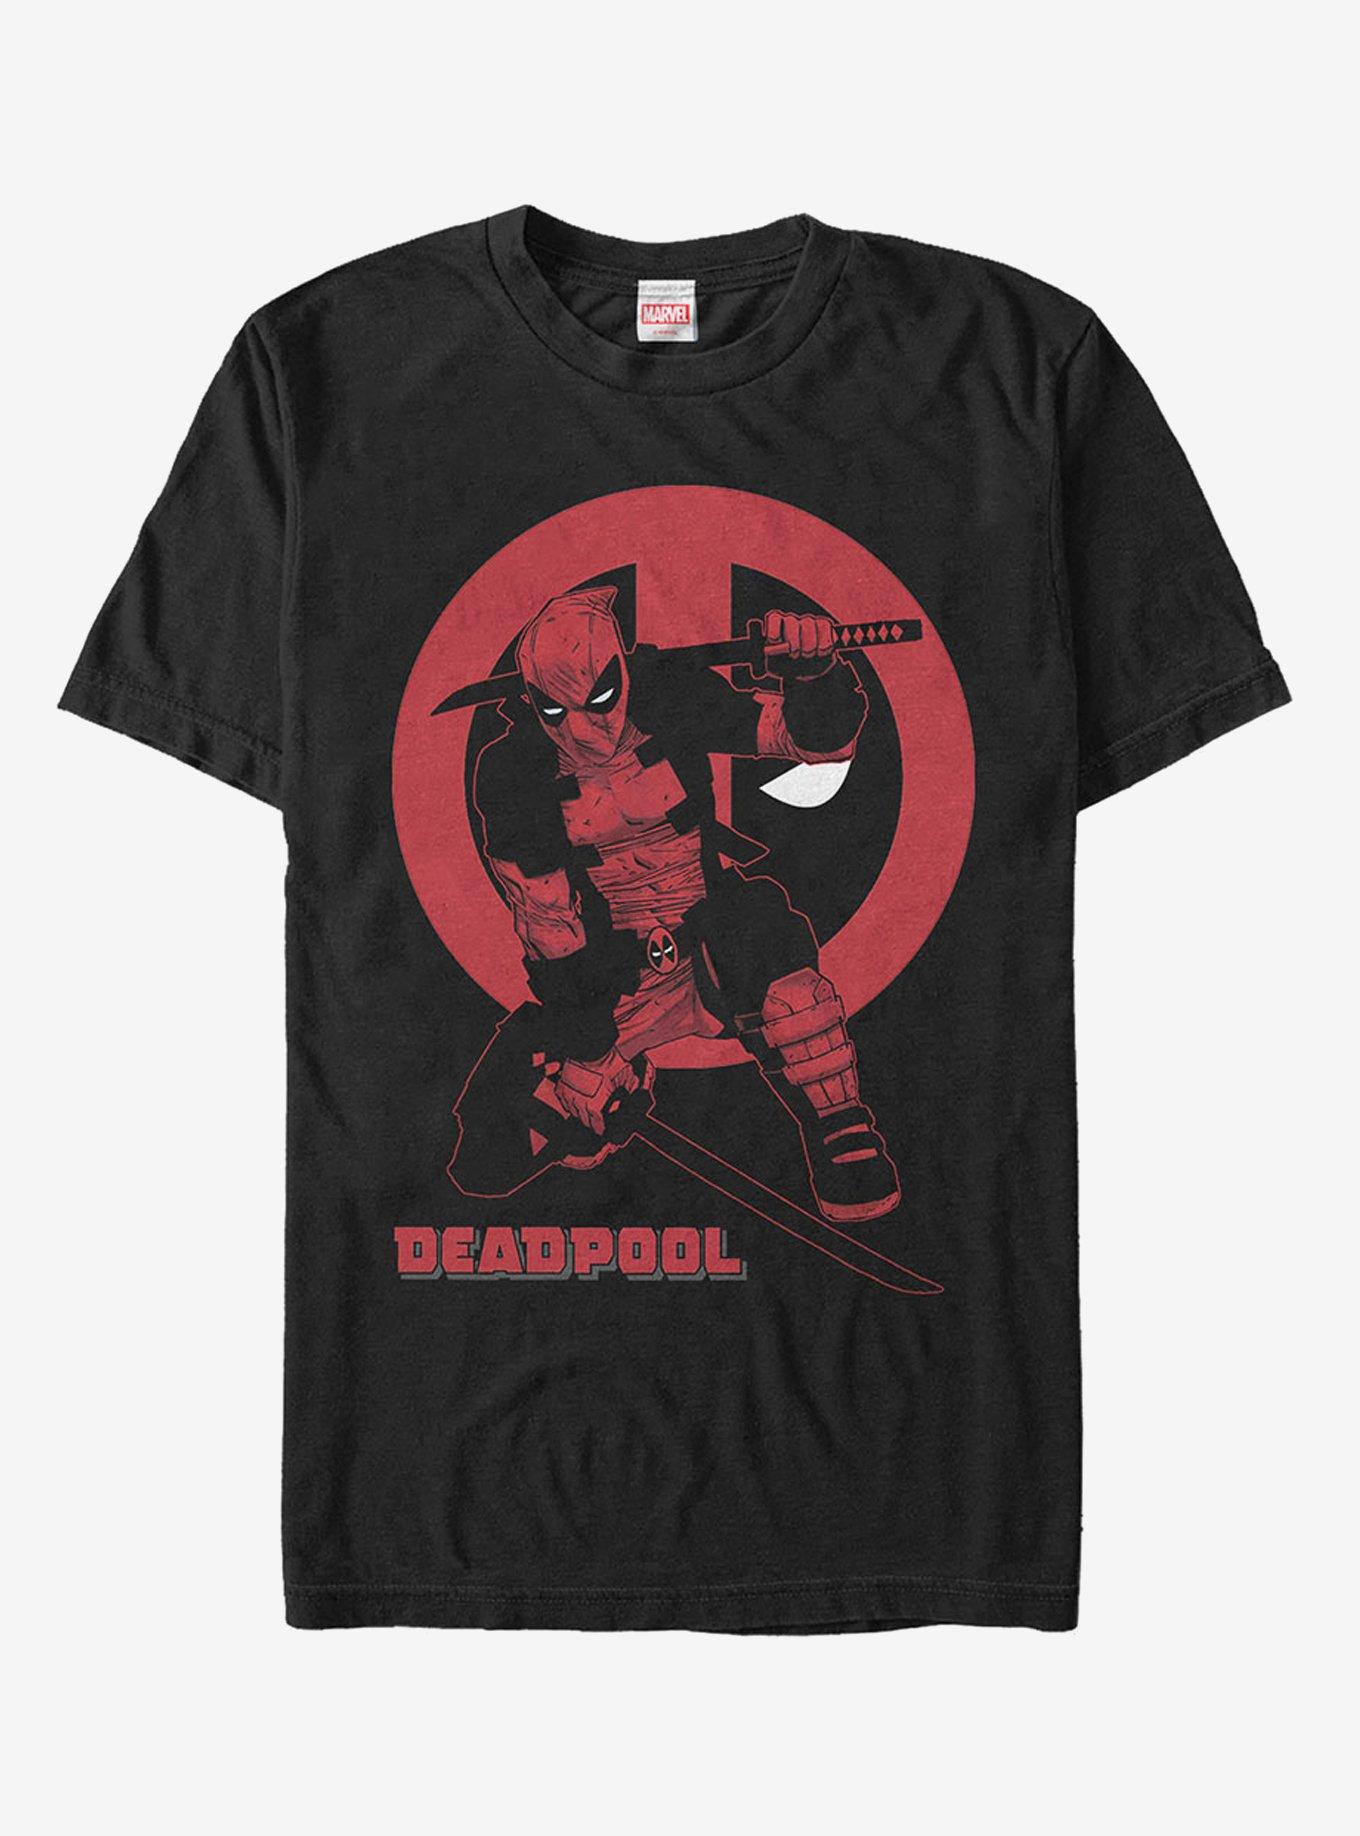 Marvel Deadpool Red Katana Sword Pose T-Shirt, BLACK, hi-res